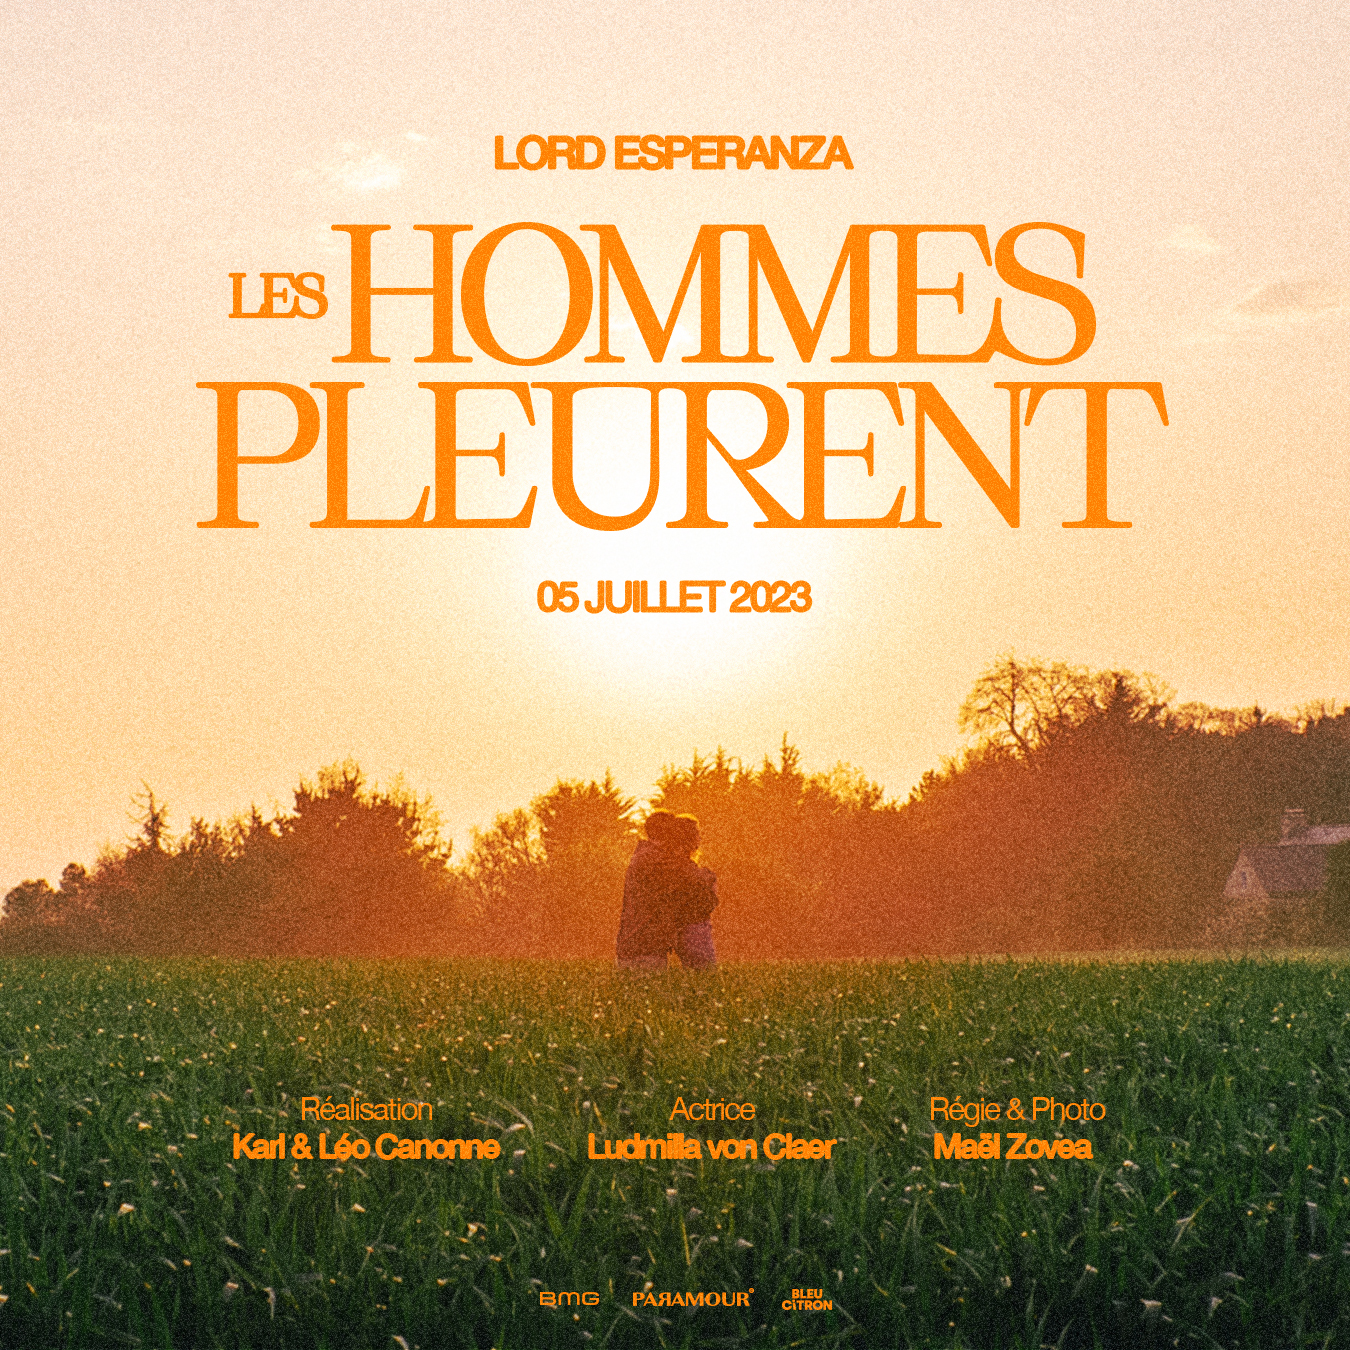 affiche-poster-lordesperanza-leshommespleurent-clip-mv-rap-french-cover